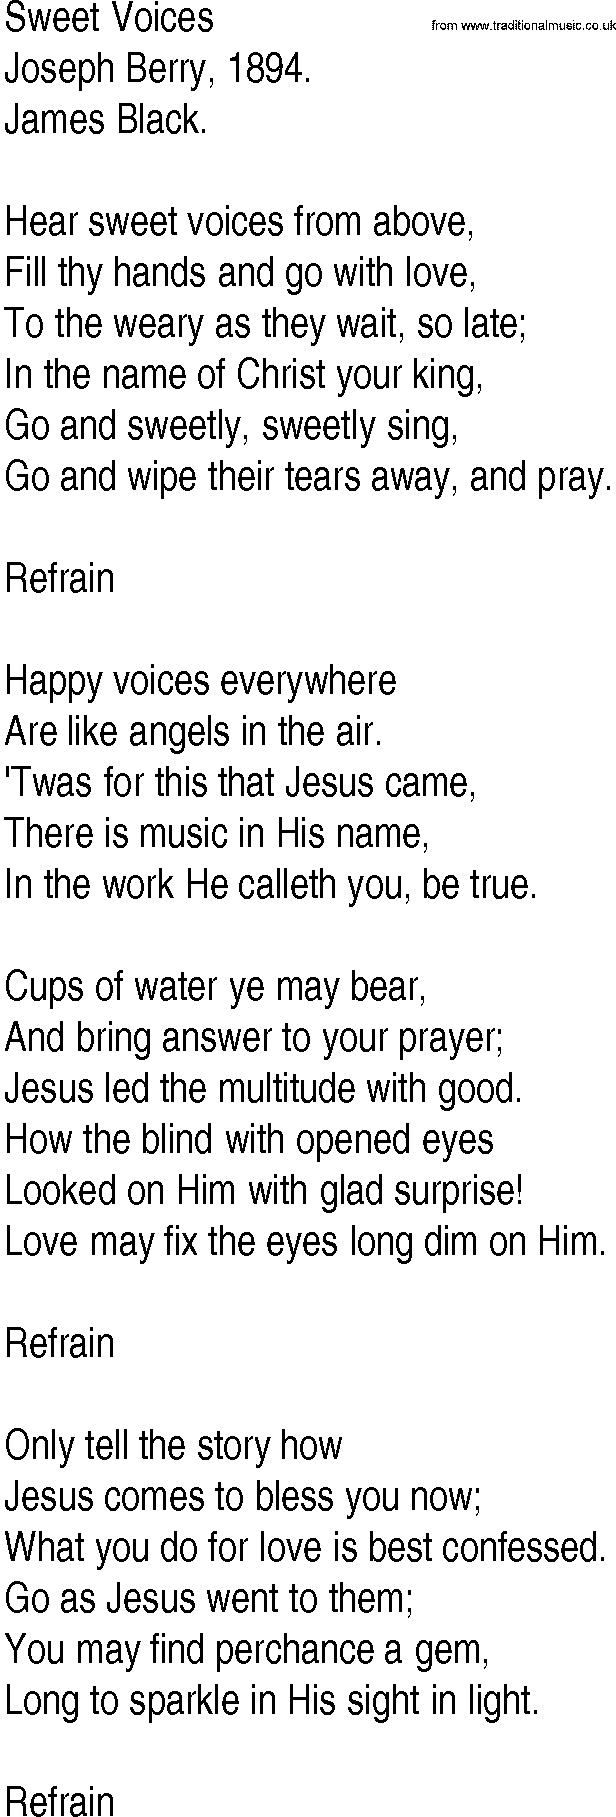 Hymn and Gospel Song: Sweet Voices by Joseph Berry lyrics